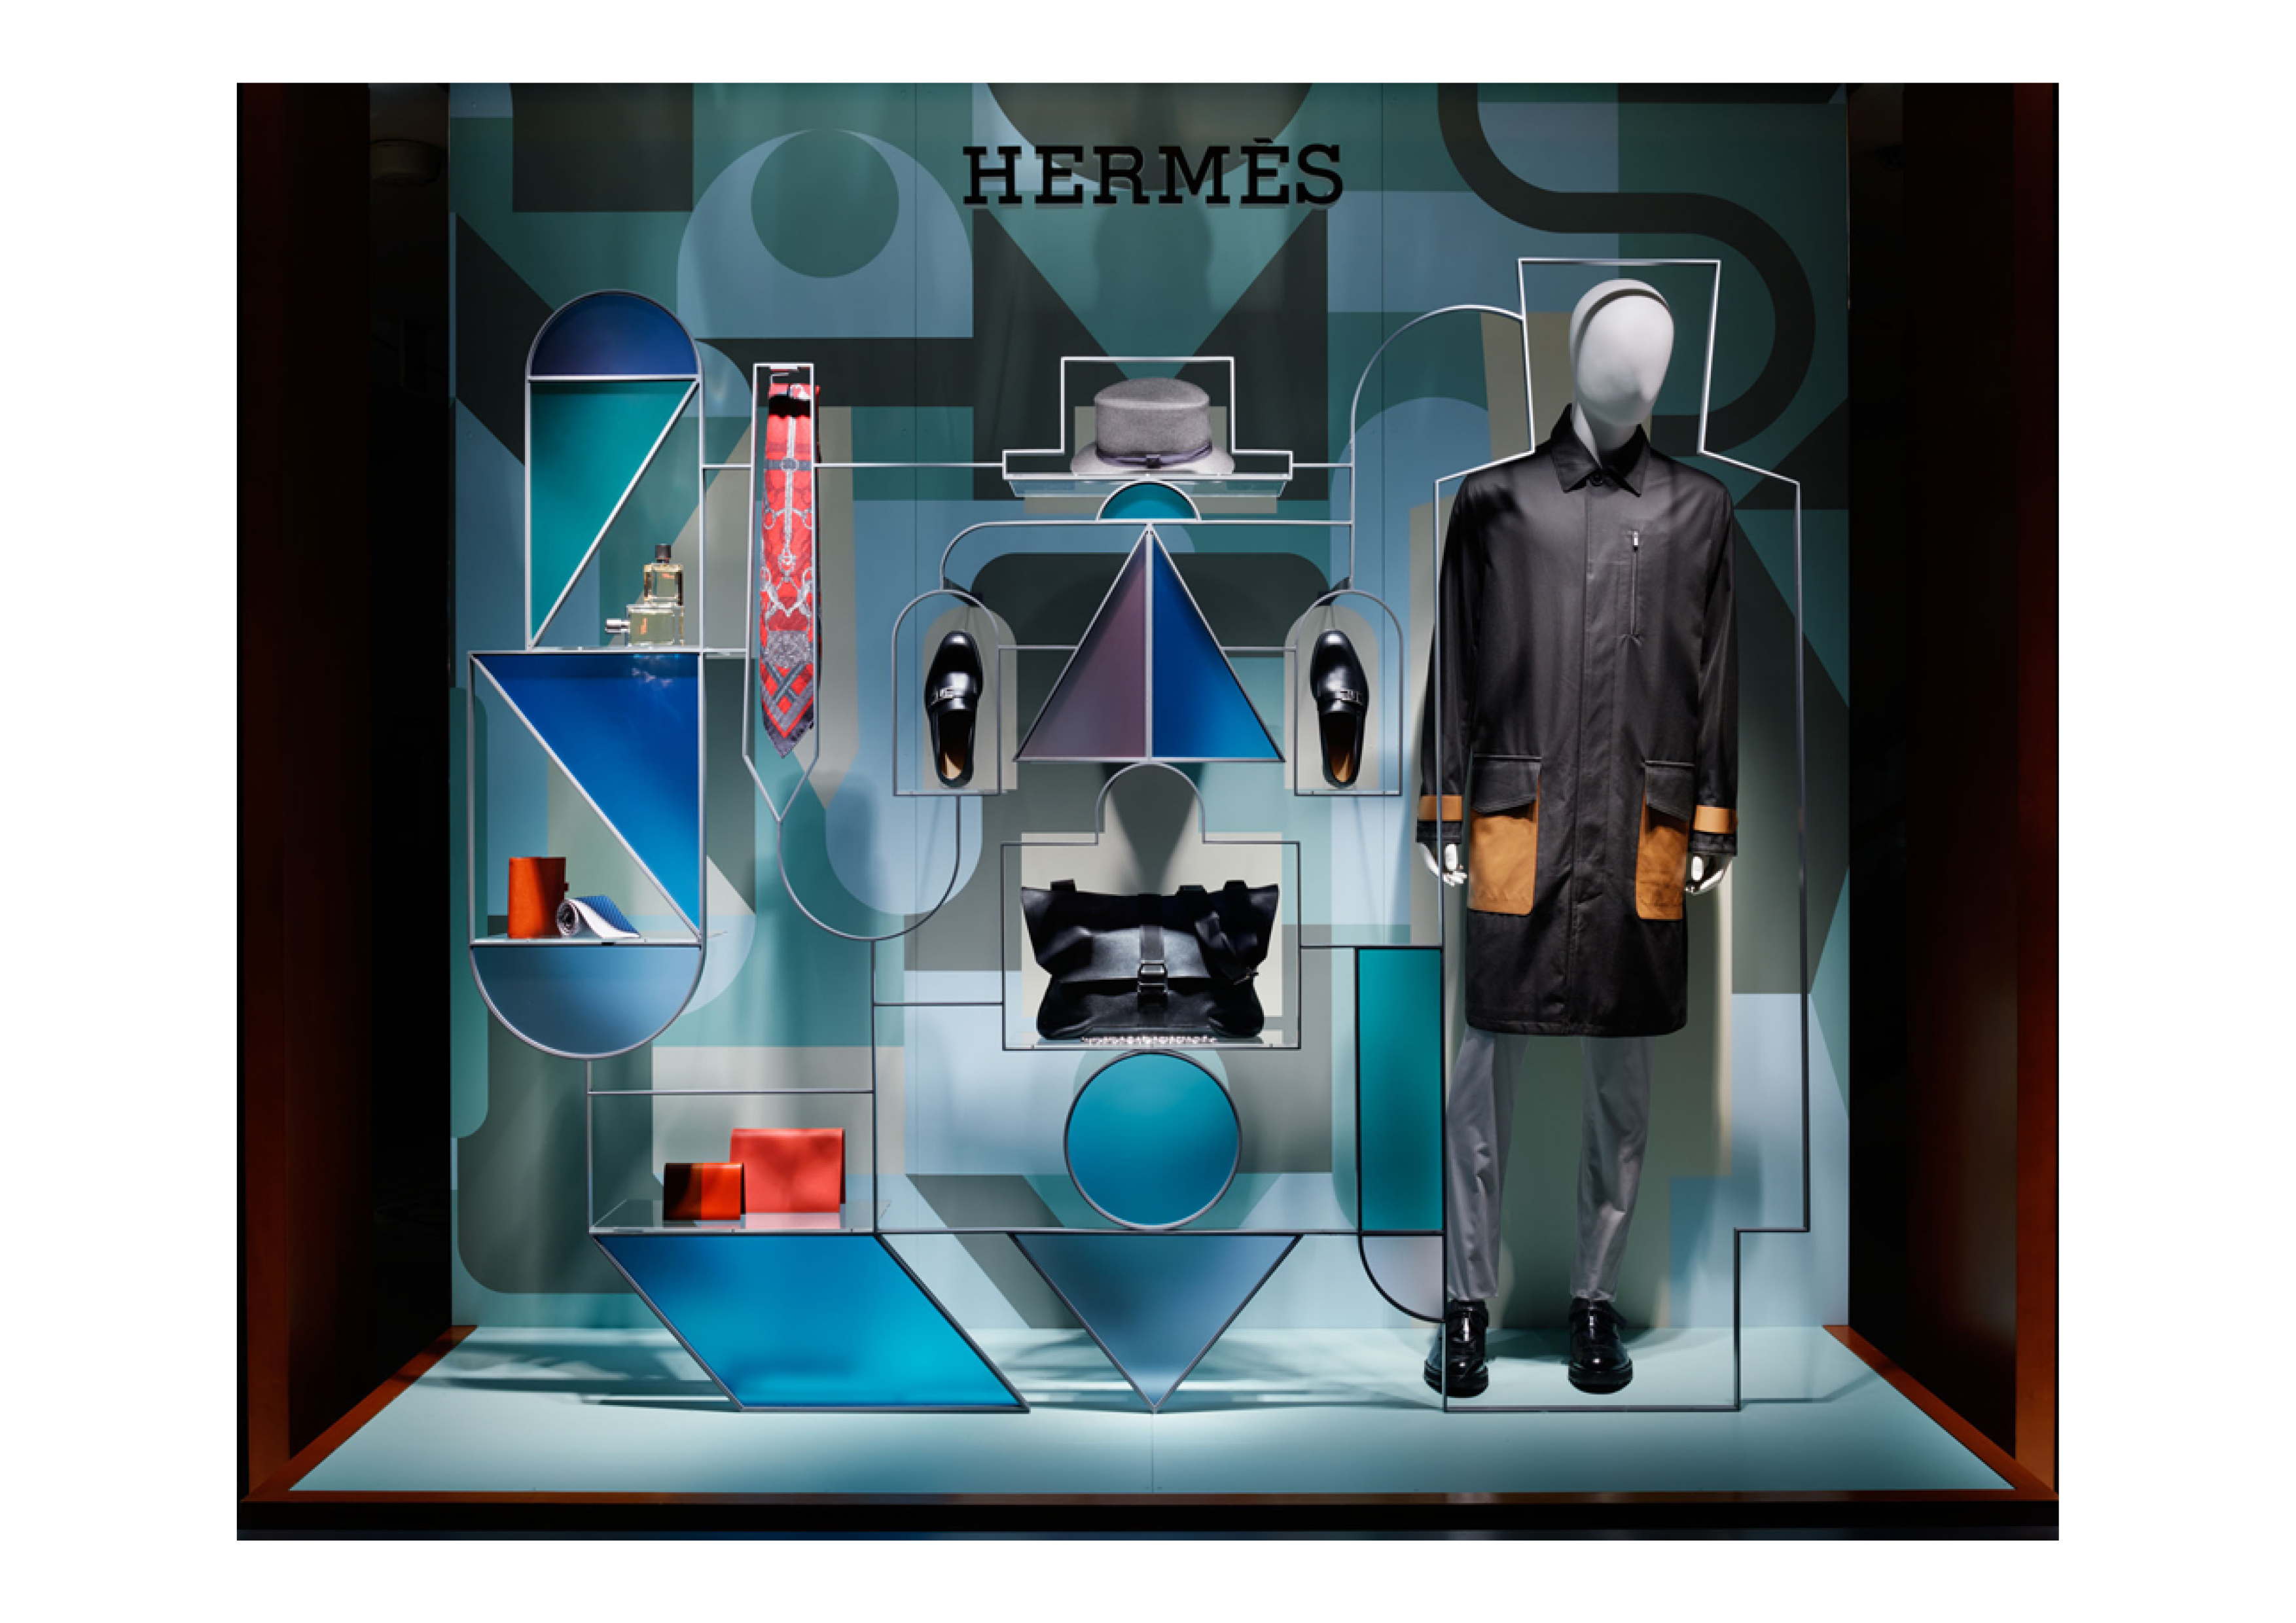 Hermès Window Display 2017